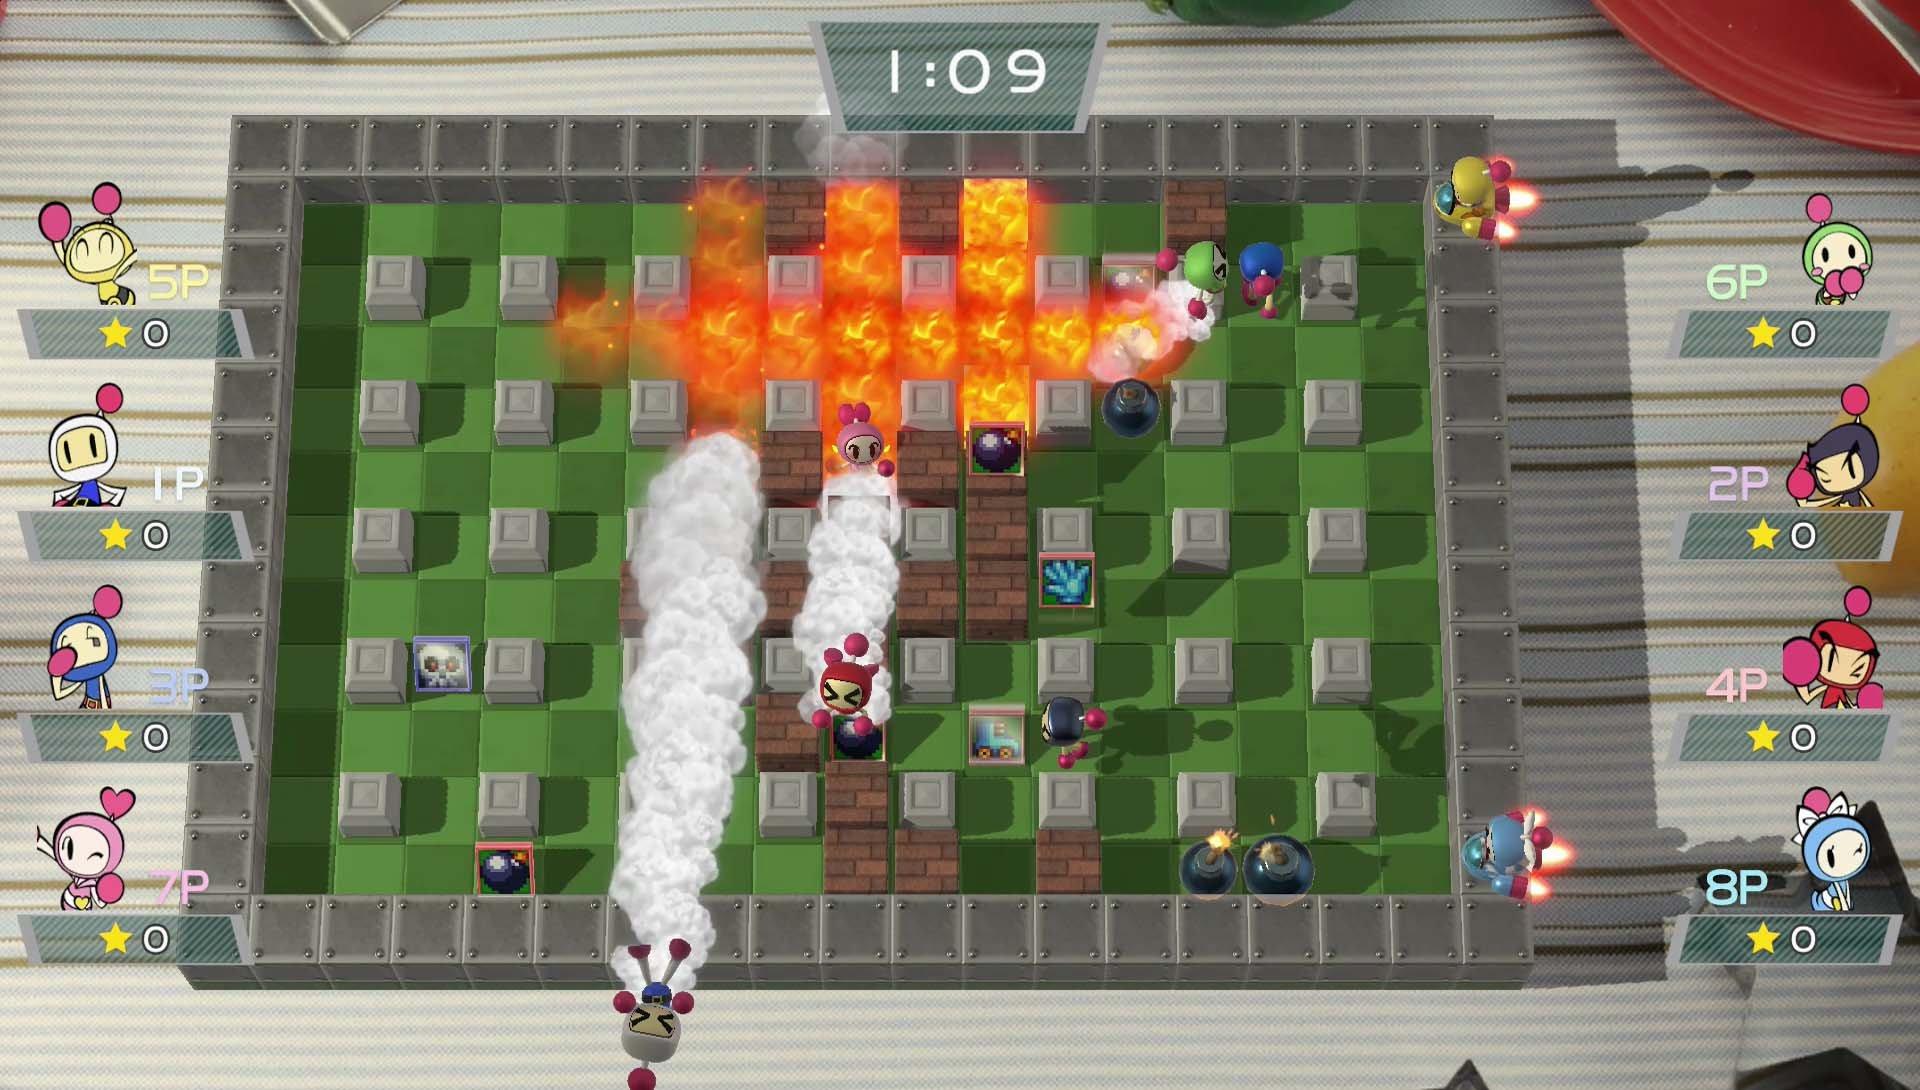 Super Bomberman R, Nintendo Switch games, Games